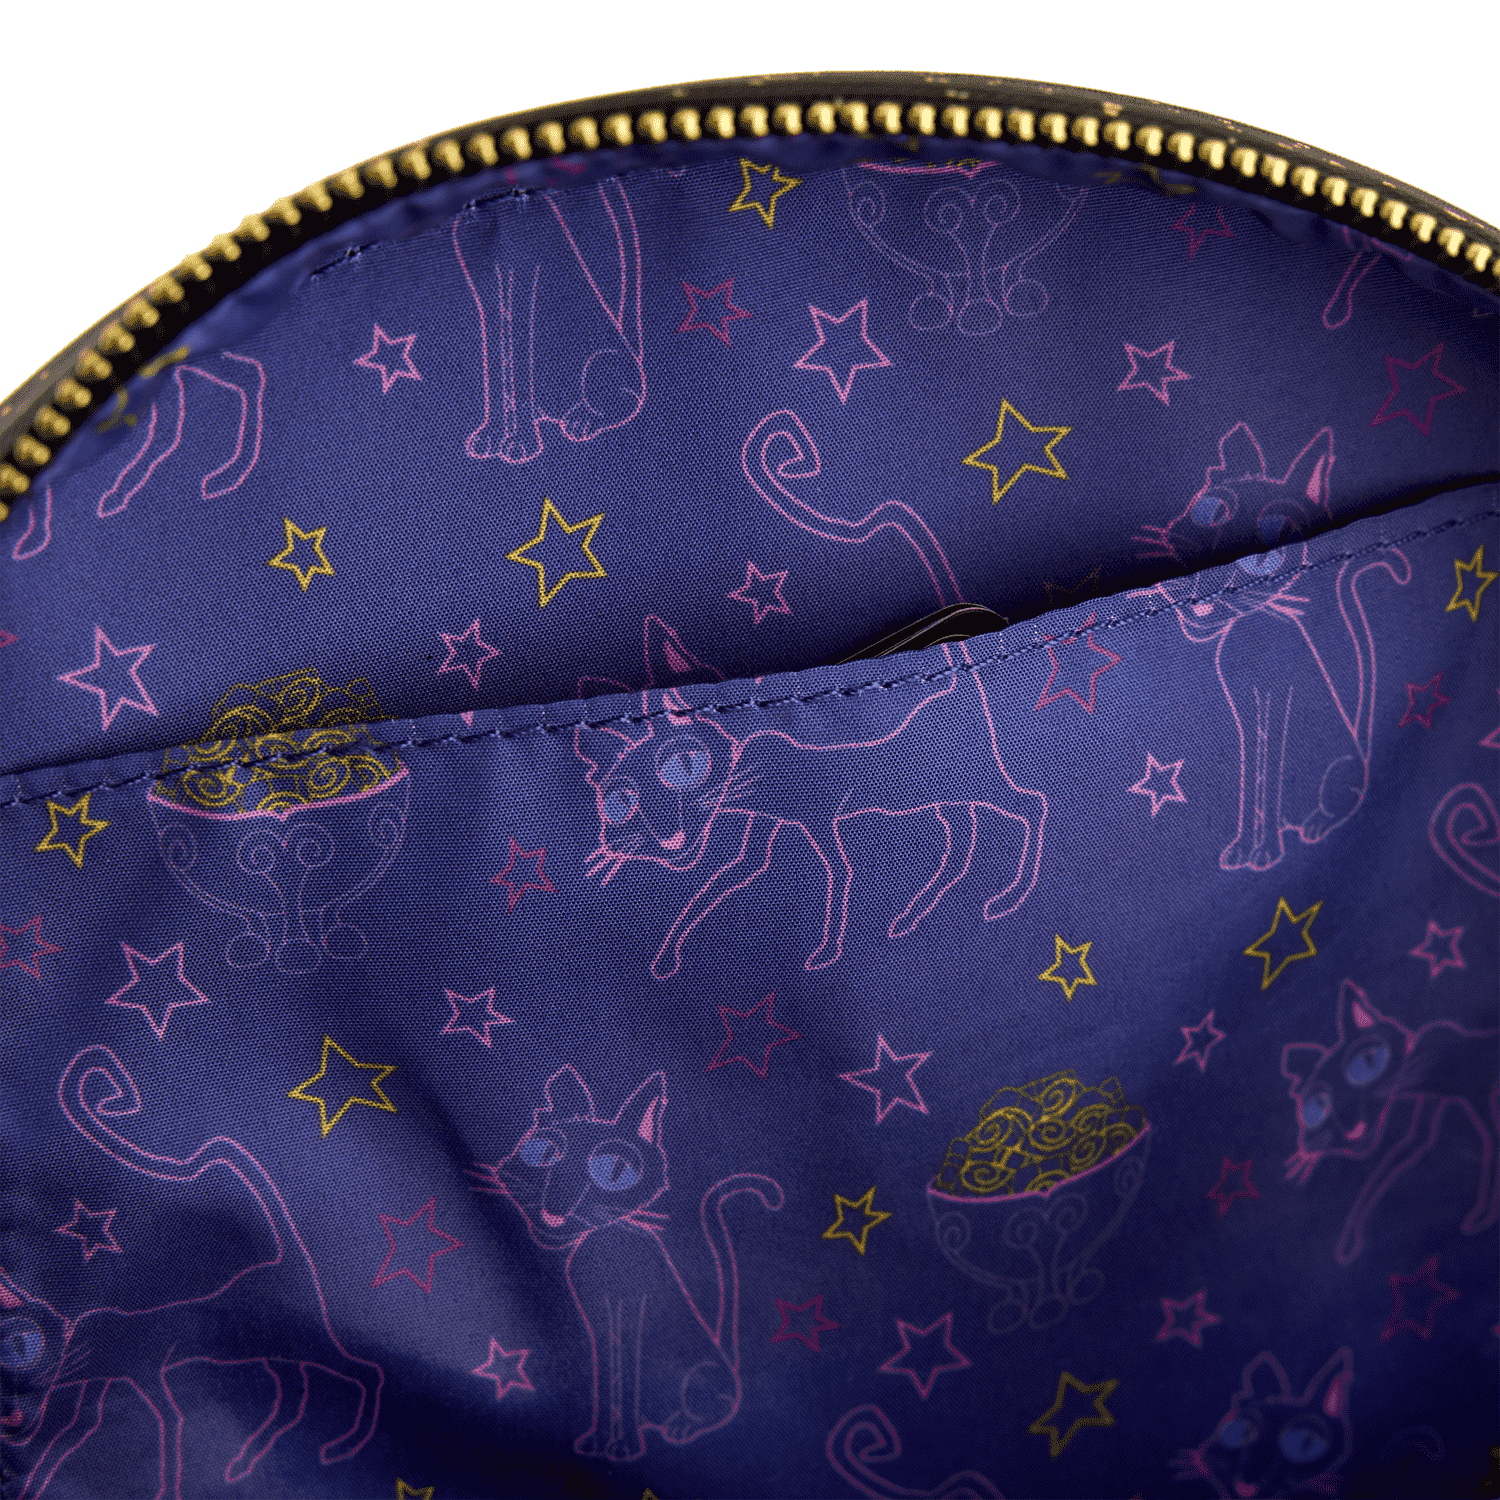 Loungefly Coraline Moon Crossbody Bag